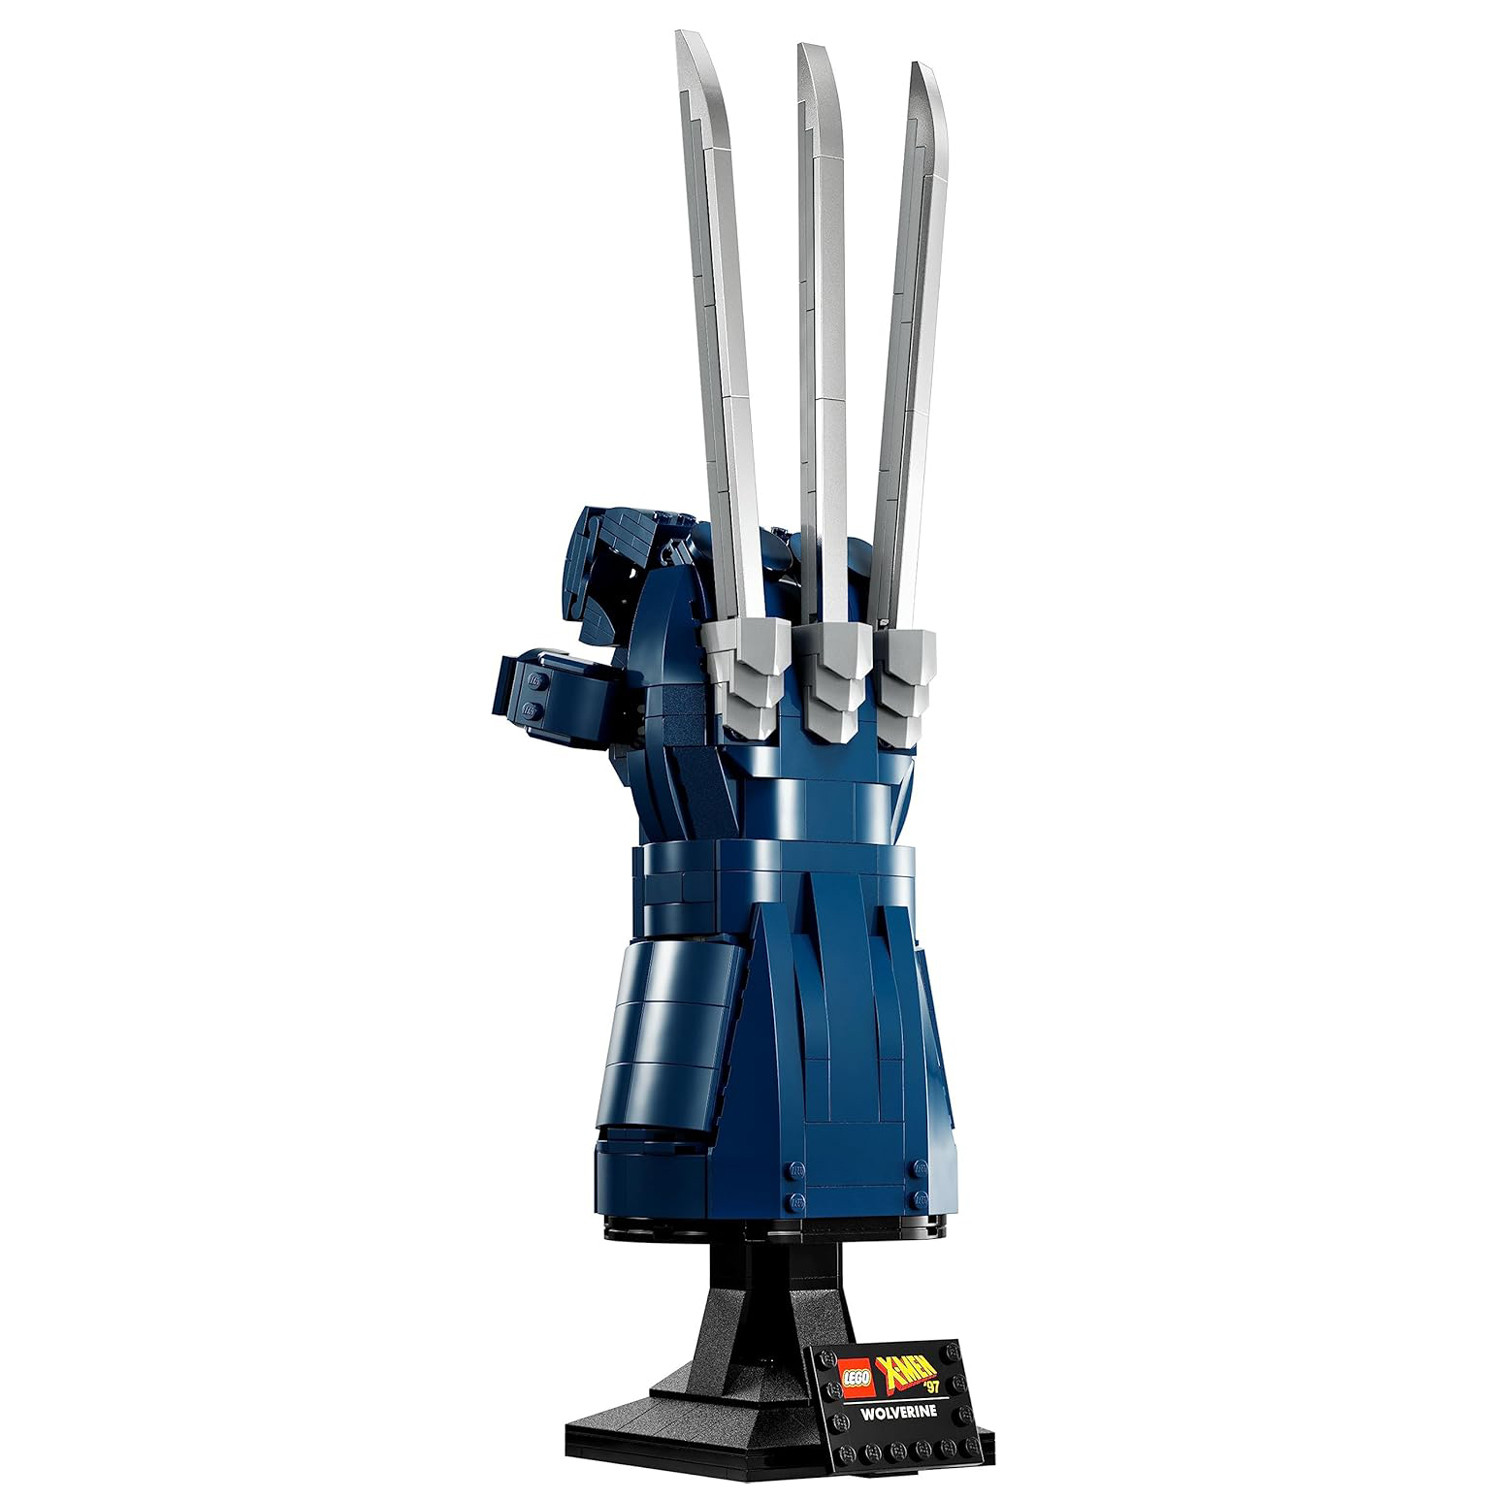 Wolverine's Adamantium Claws 76250 Brick Building Kit